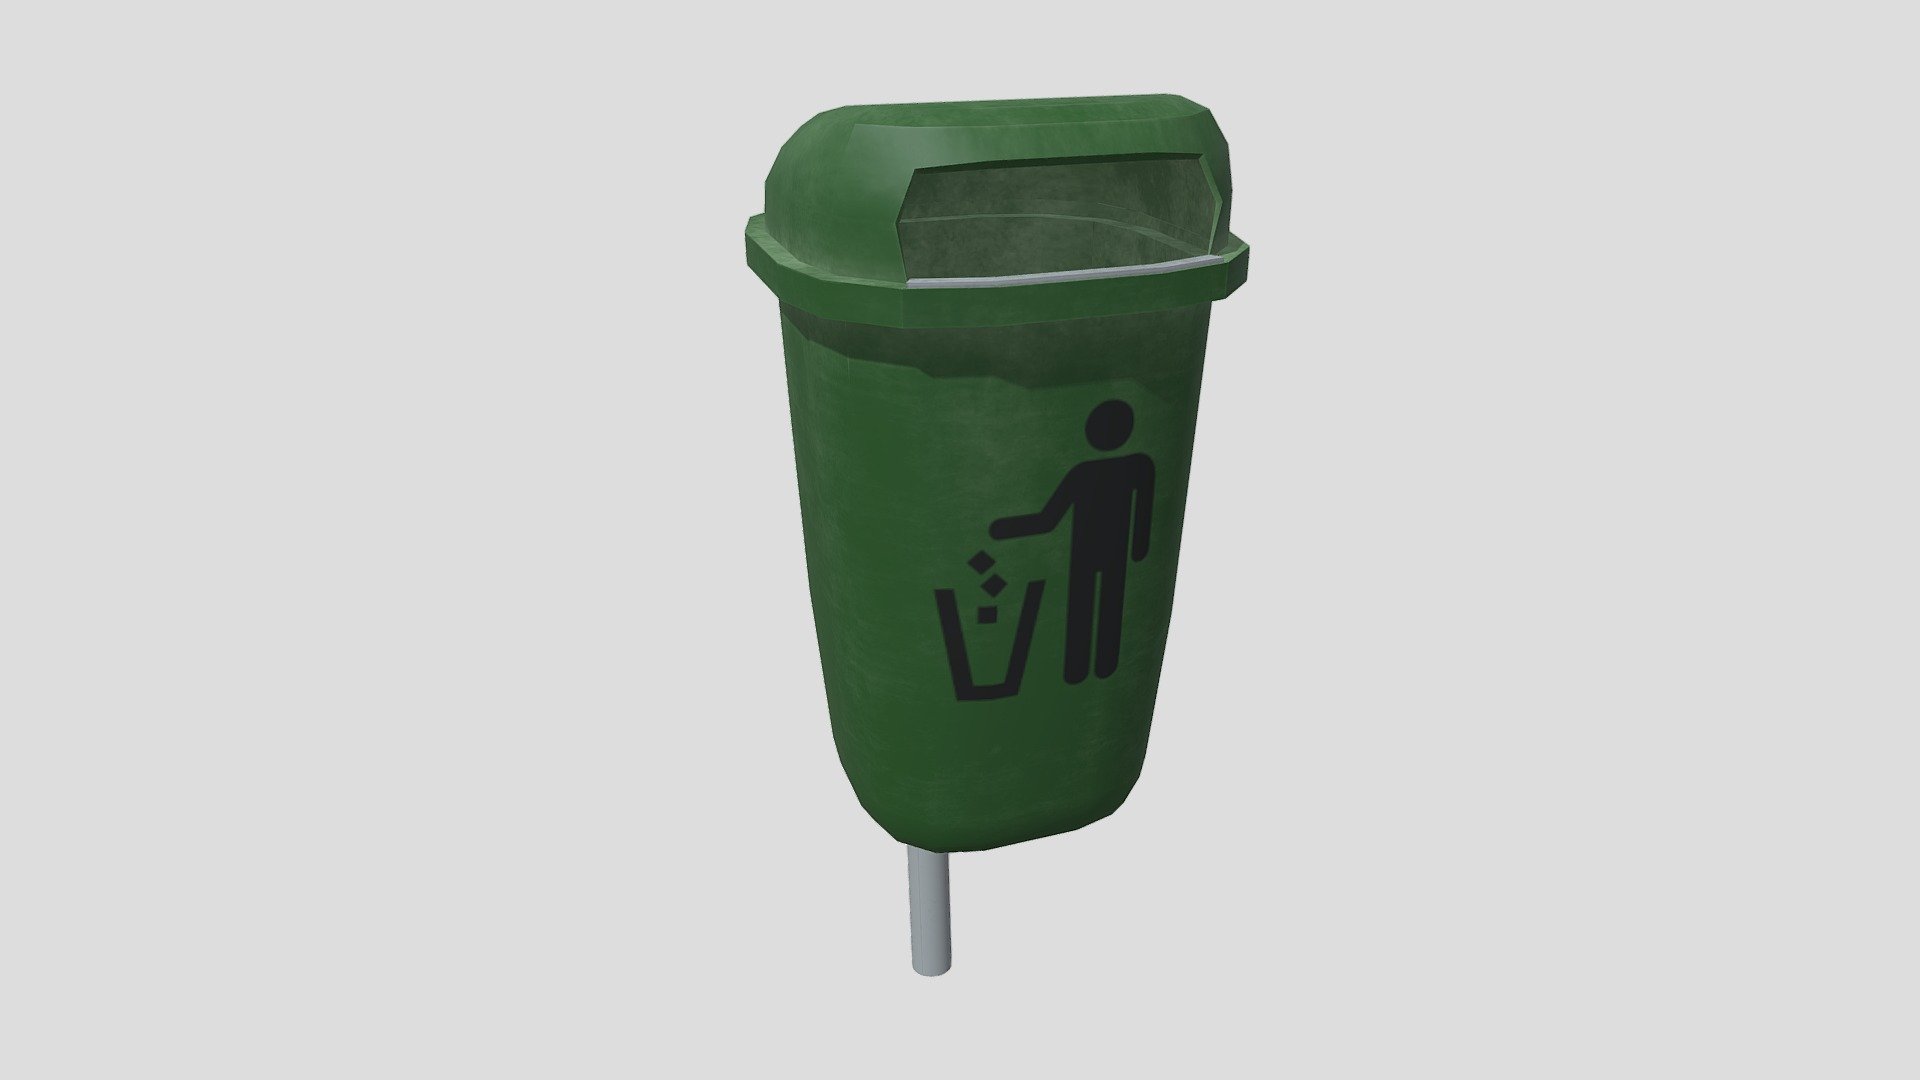 A trash can model made for the Mustila Arboretum VR game - Mustila Arboretum VR - Trash Can - 3D model by Jenna Toivonen (@Kataeahh) 3d model